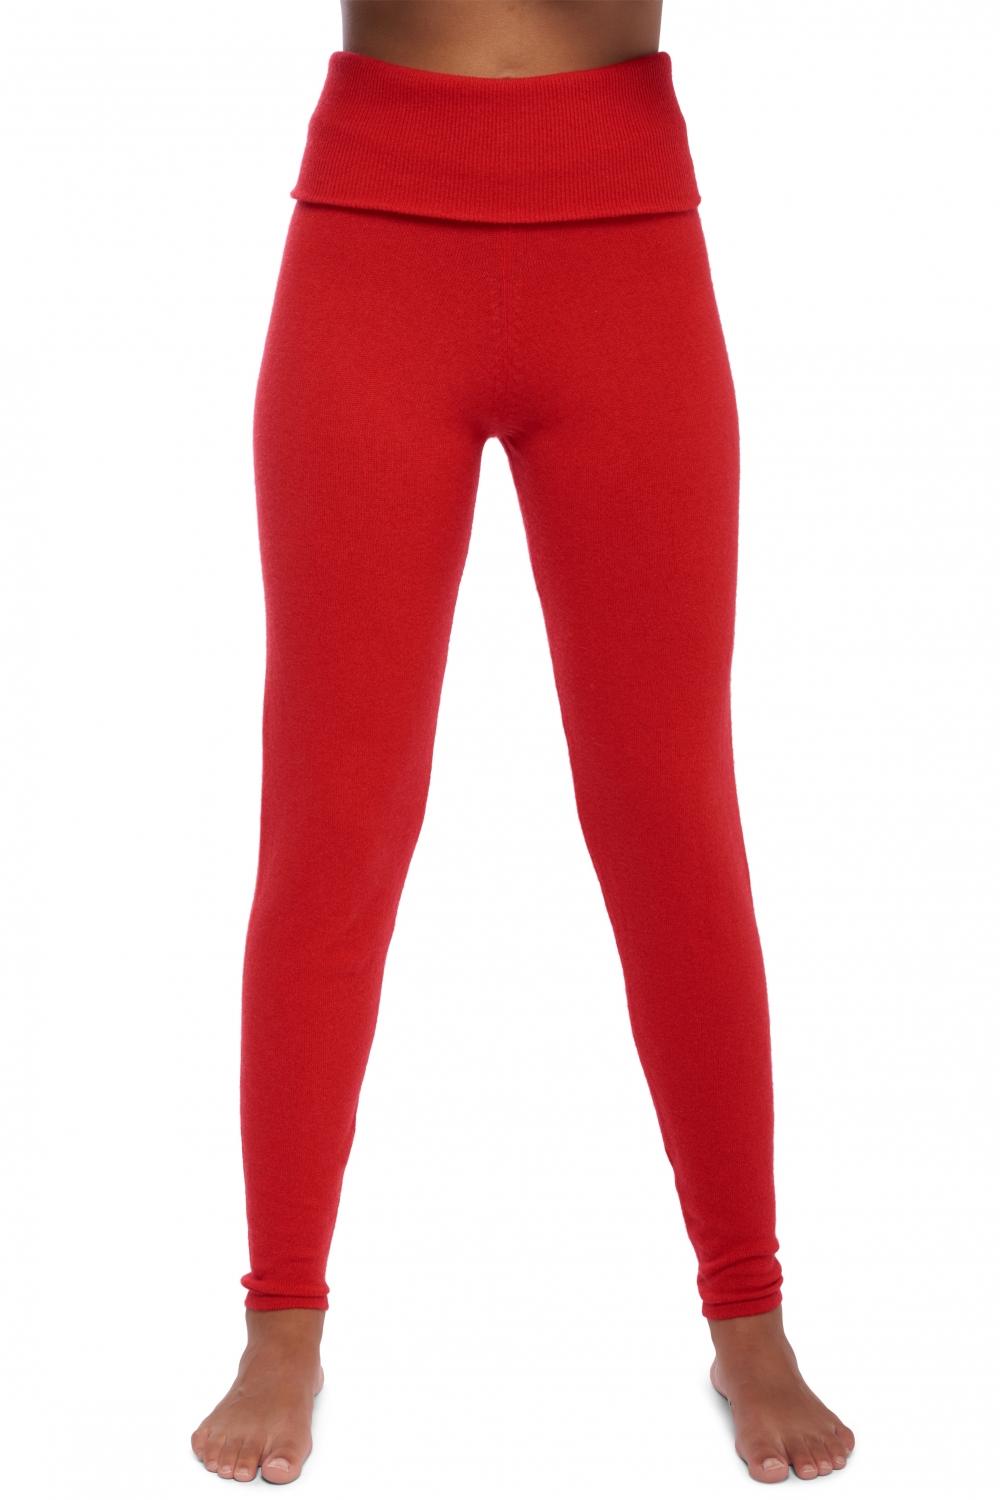 Cashmere accessoires shirley rouge 2xl